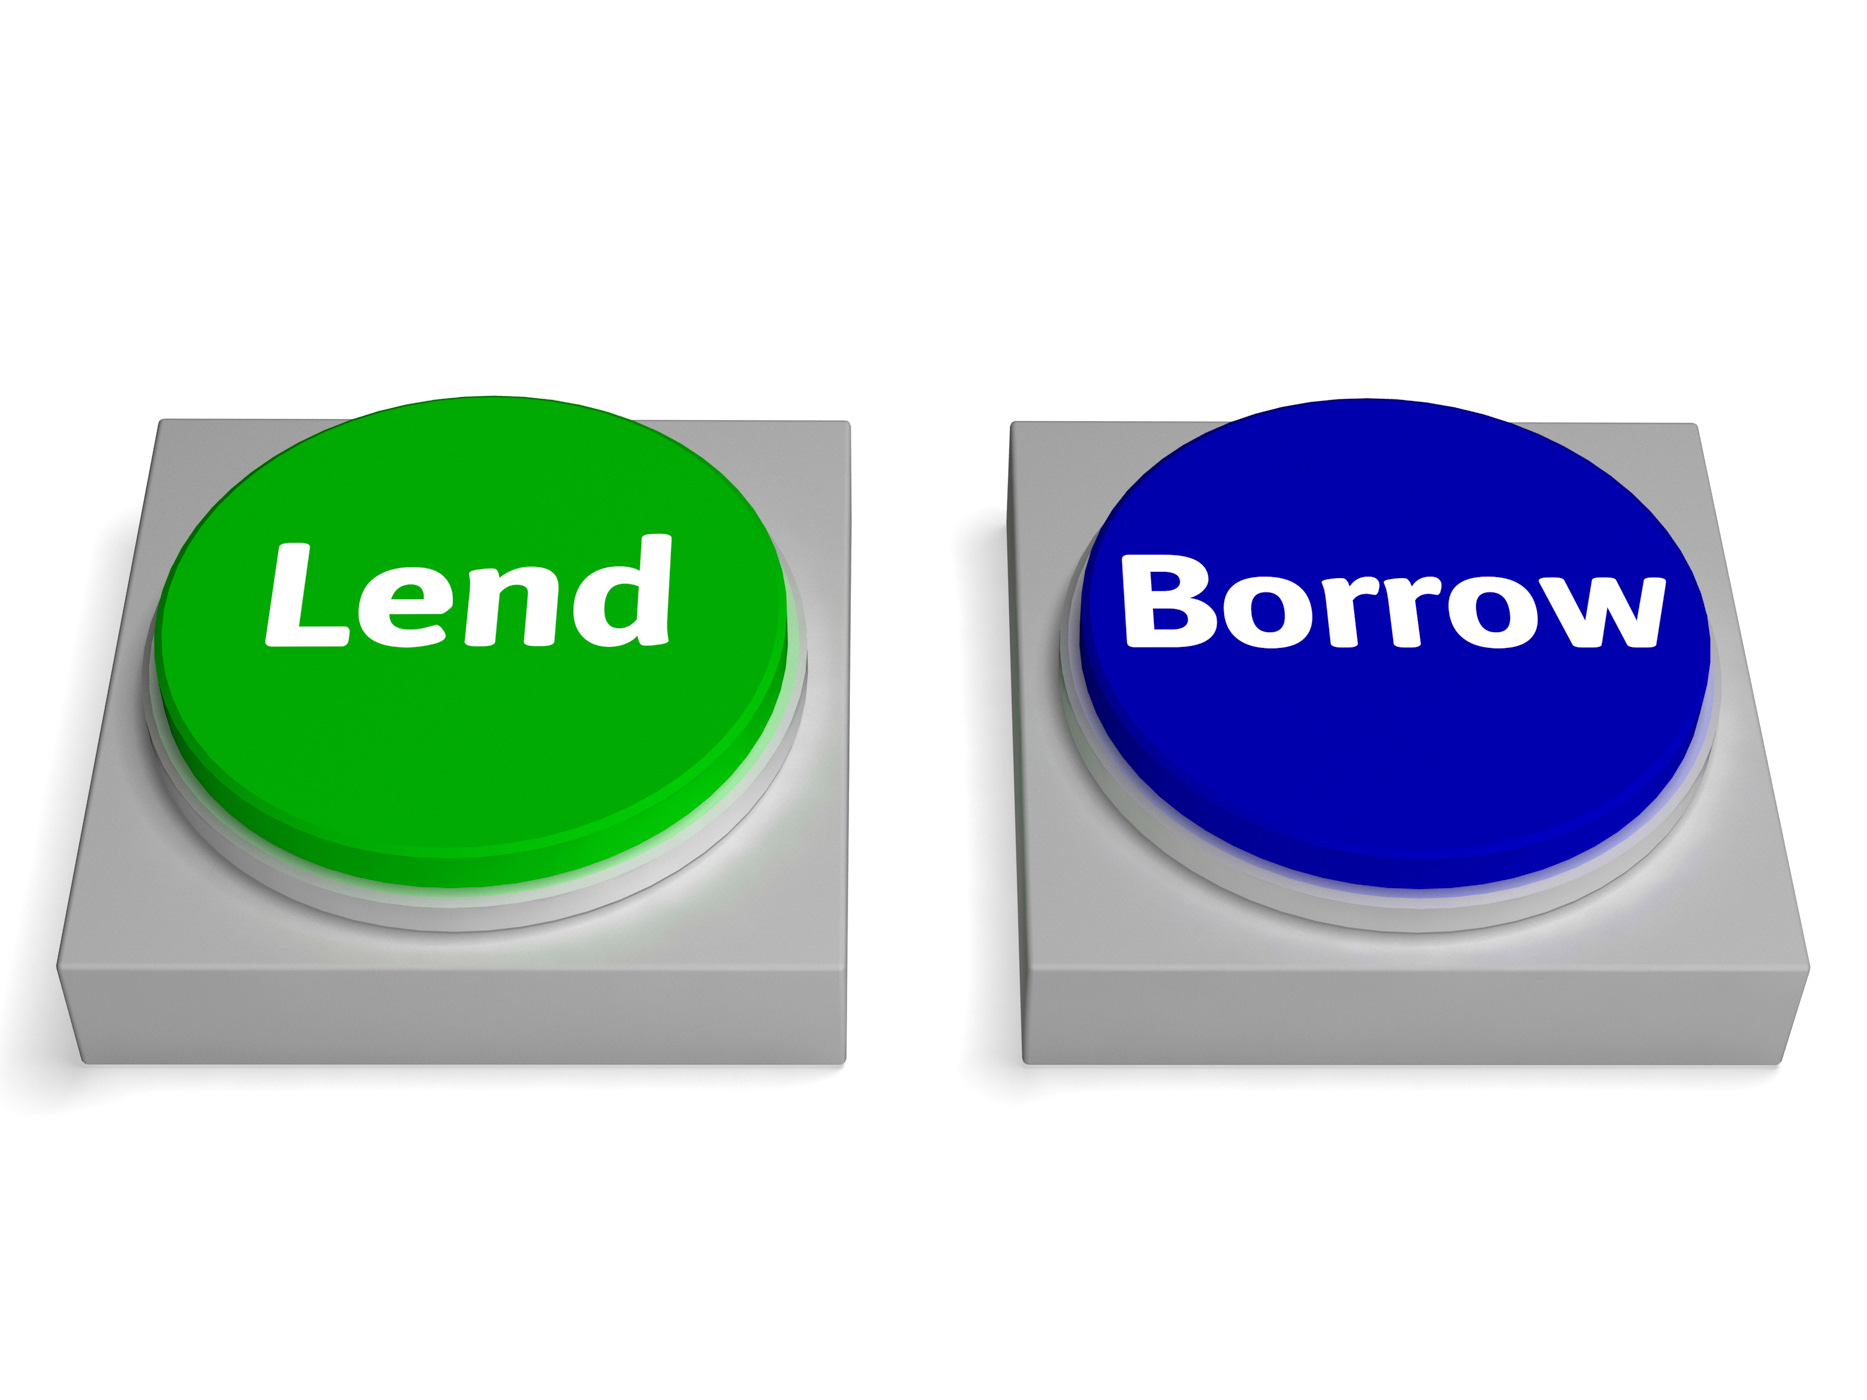 Lend Borrow Buttons Show Lending Or Borrowing, Bank, Funds, Money, Loan, HQ Photo